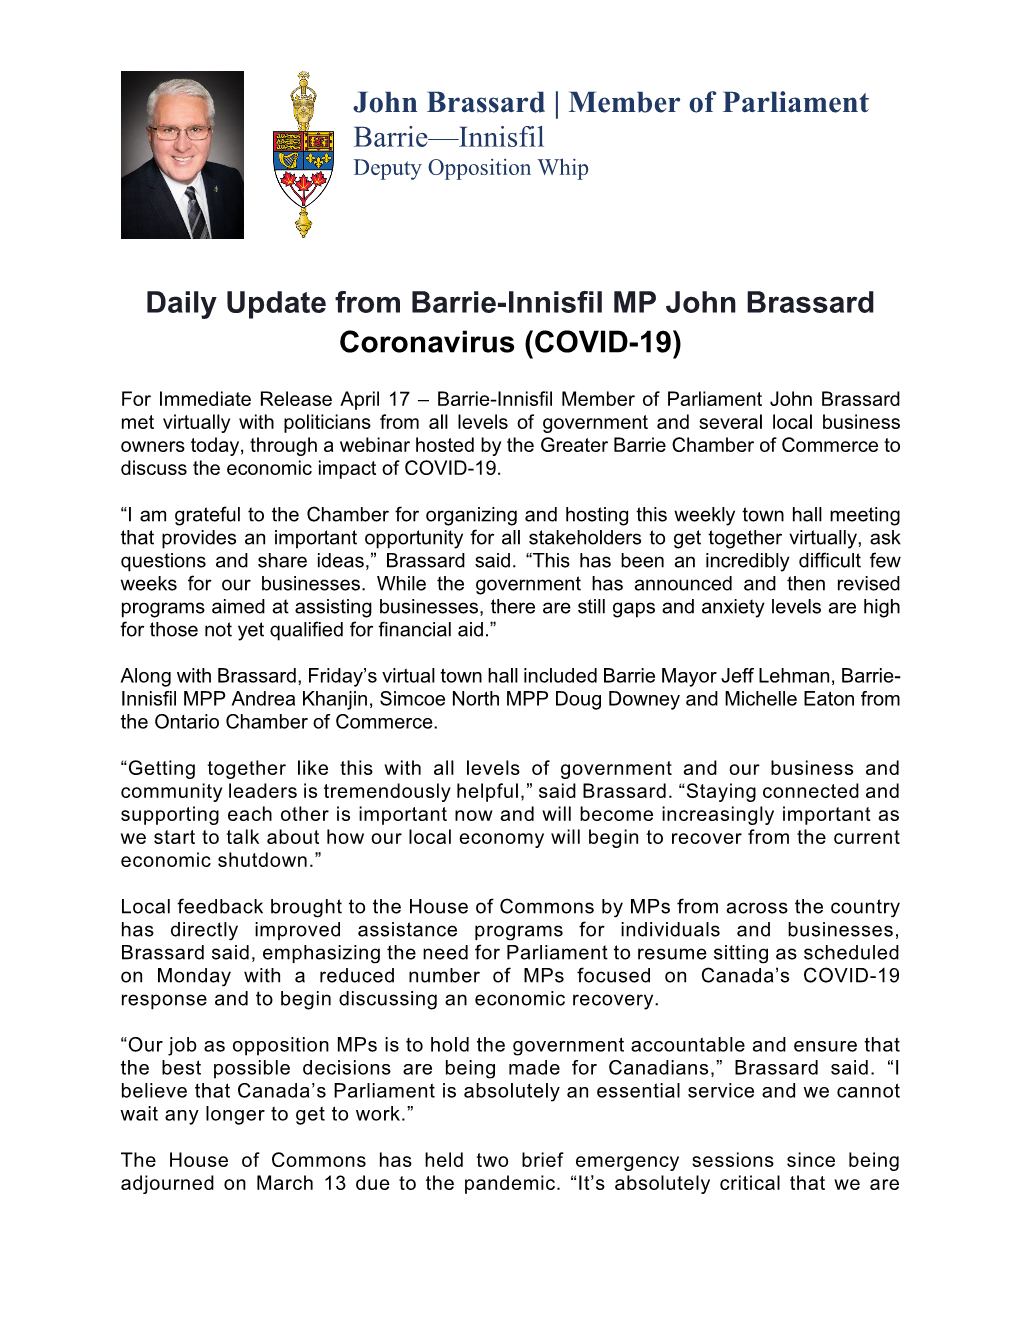 Daily Update from Barrie-Innisfil MP John Brassard Coronavirus (COVID-19)